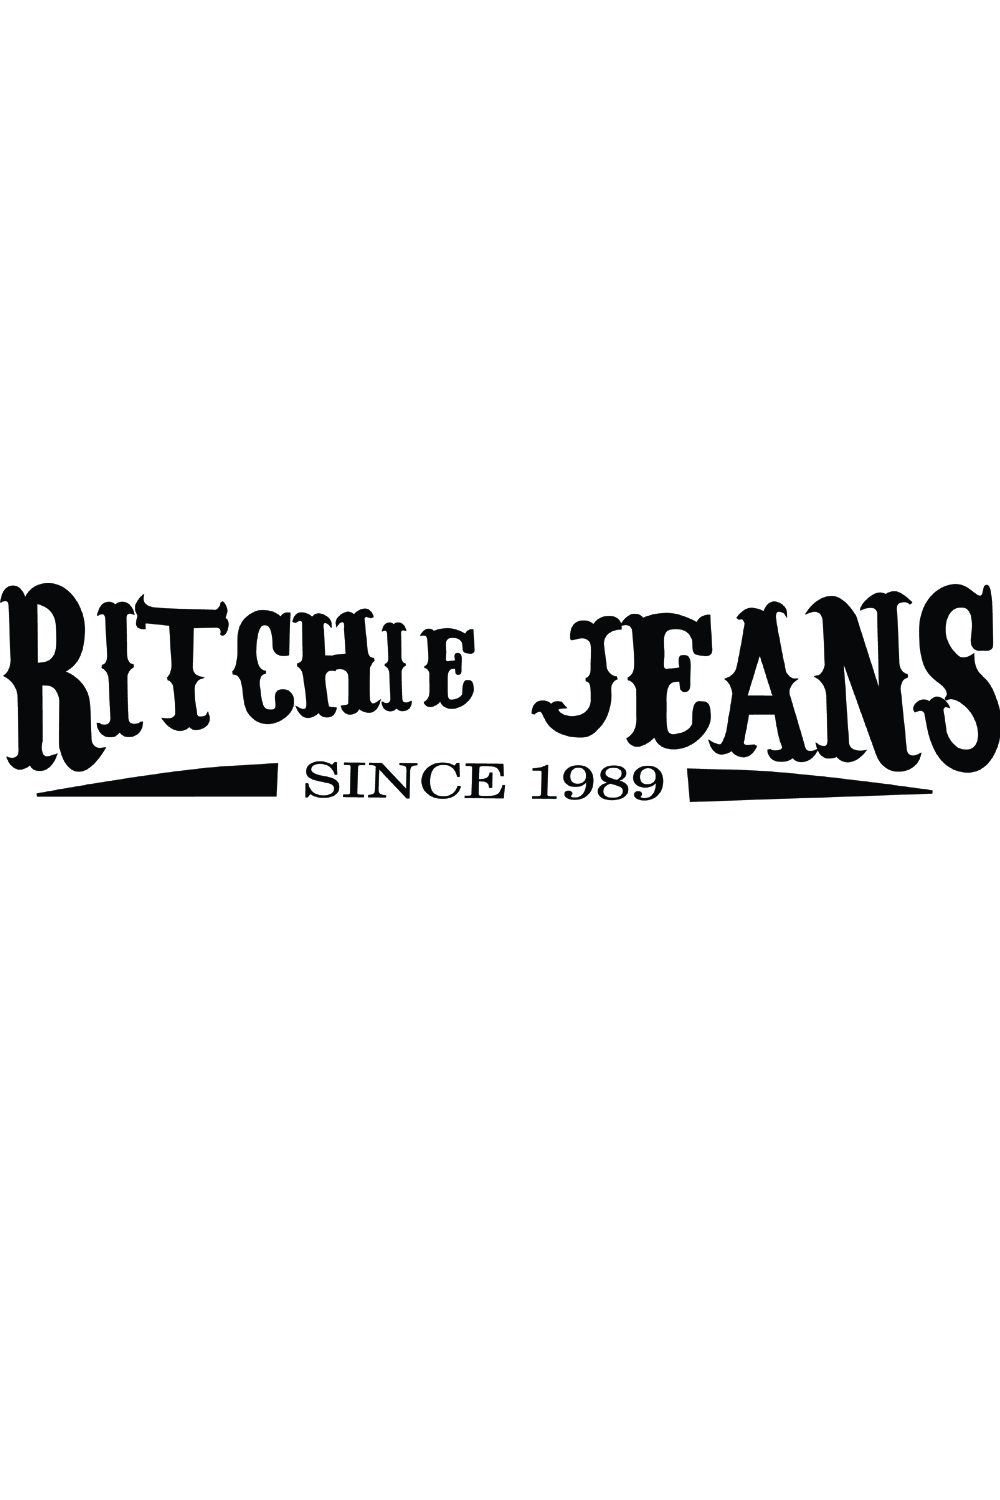 Ritchie Jeans T Shirt pinterest preview image.